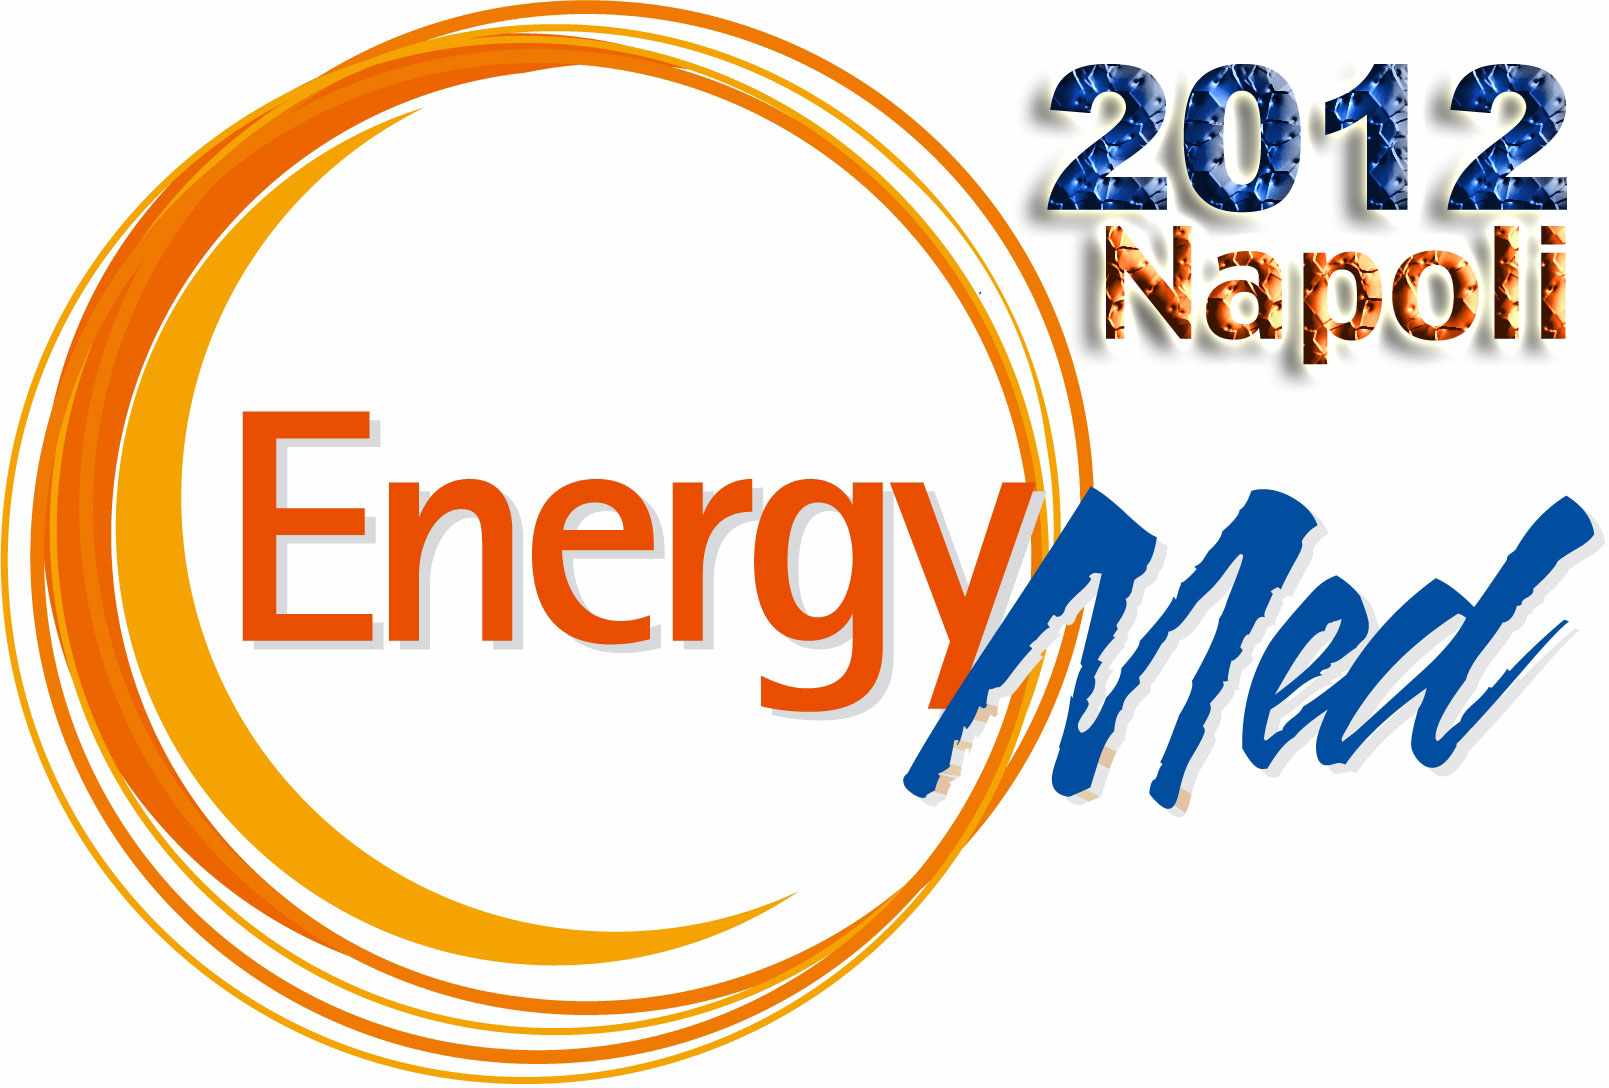 Energy Med 2012 di Napoli